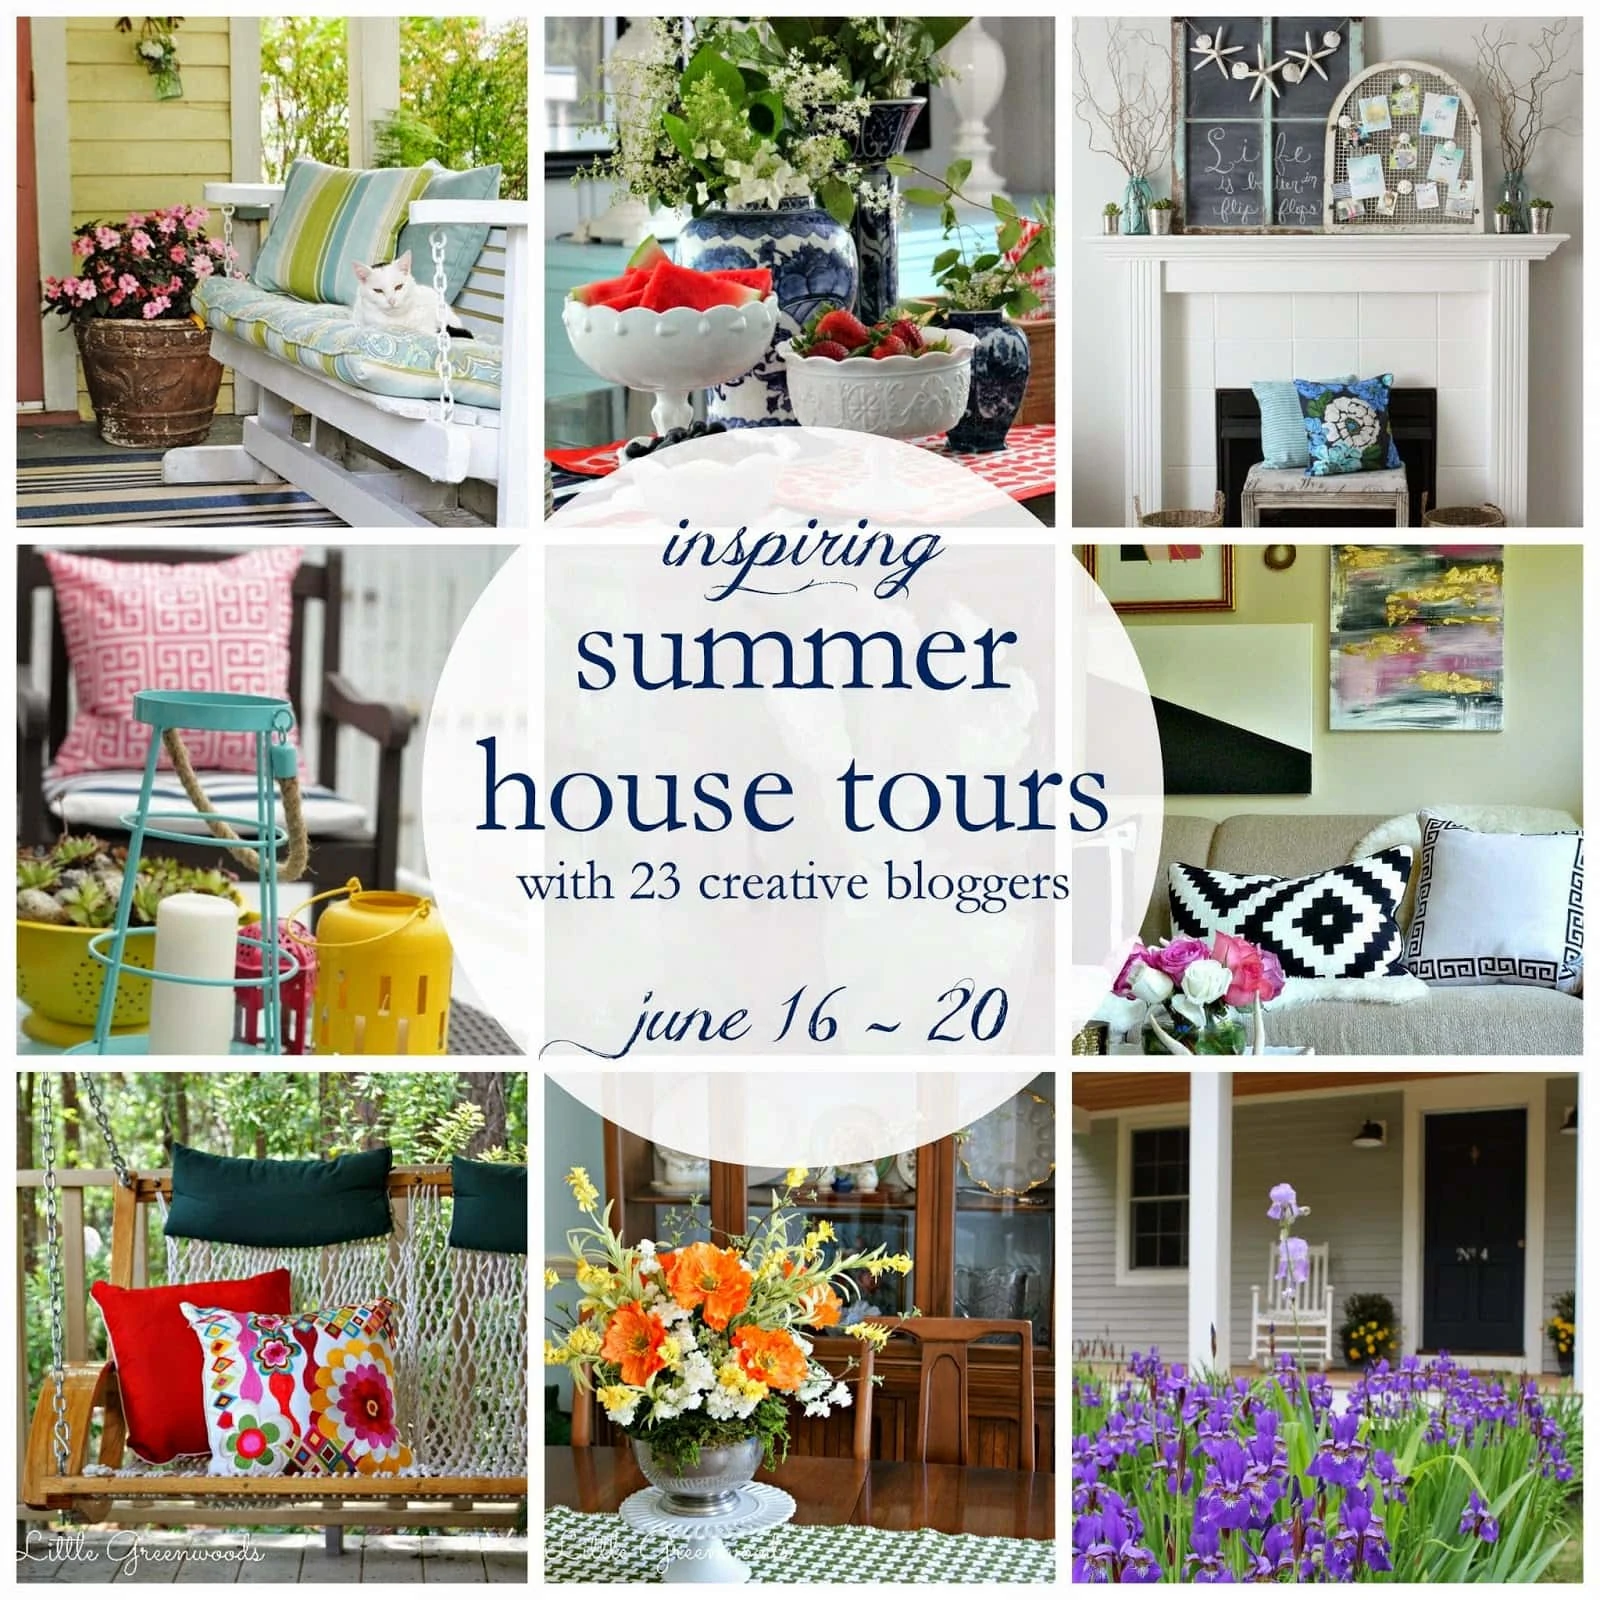 Inspiring summer house tours poster.